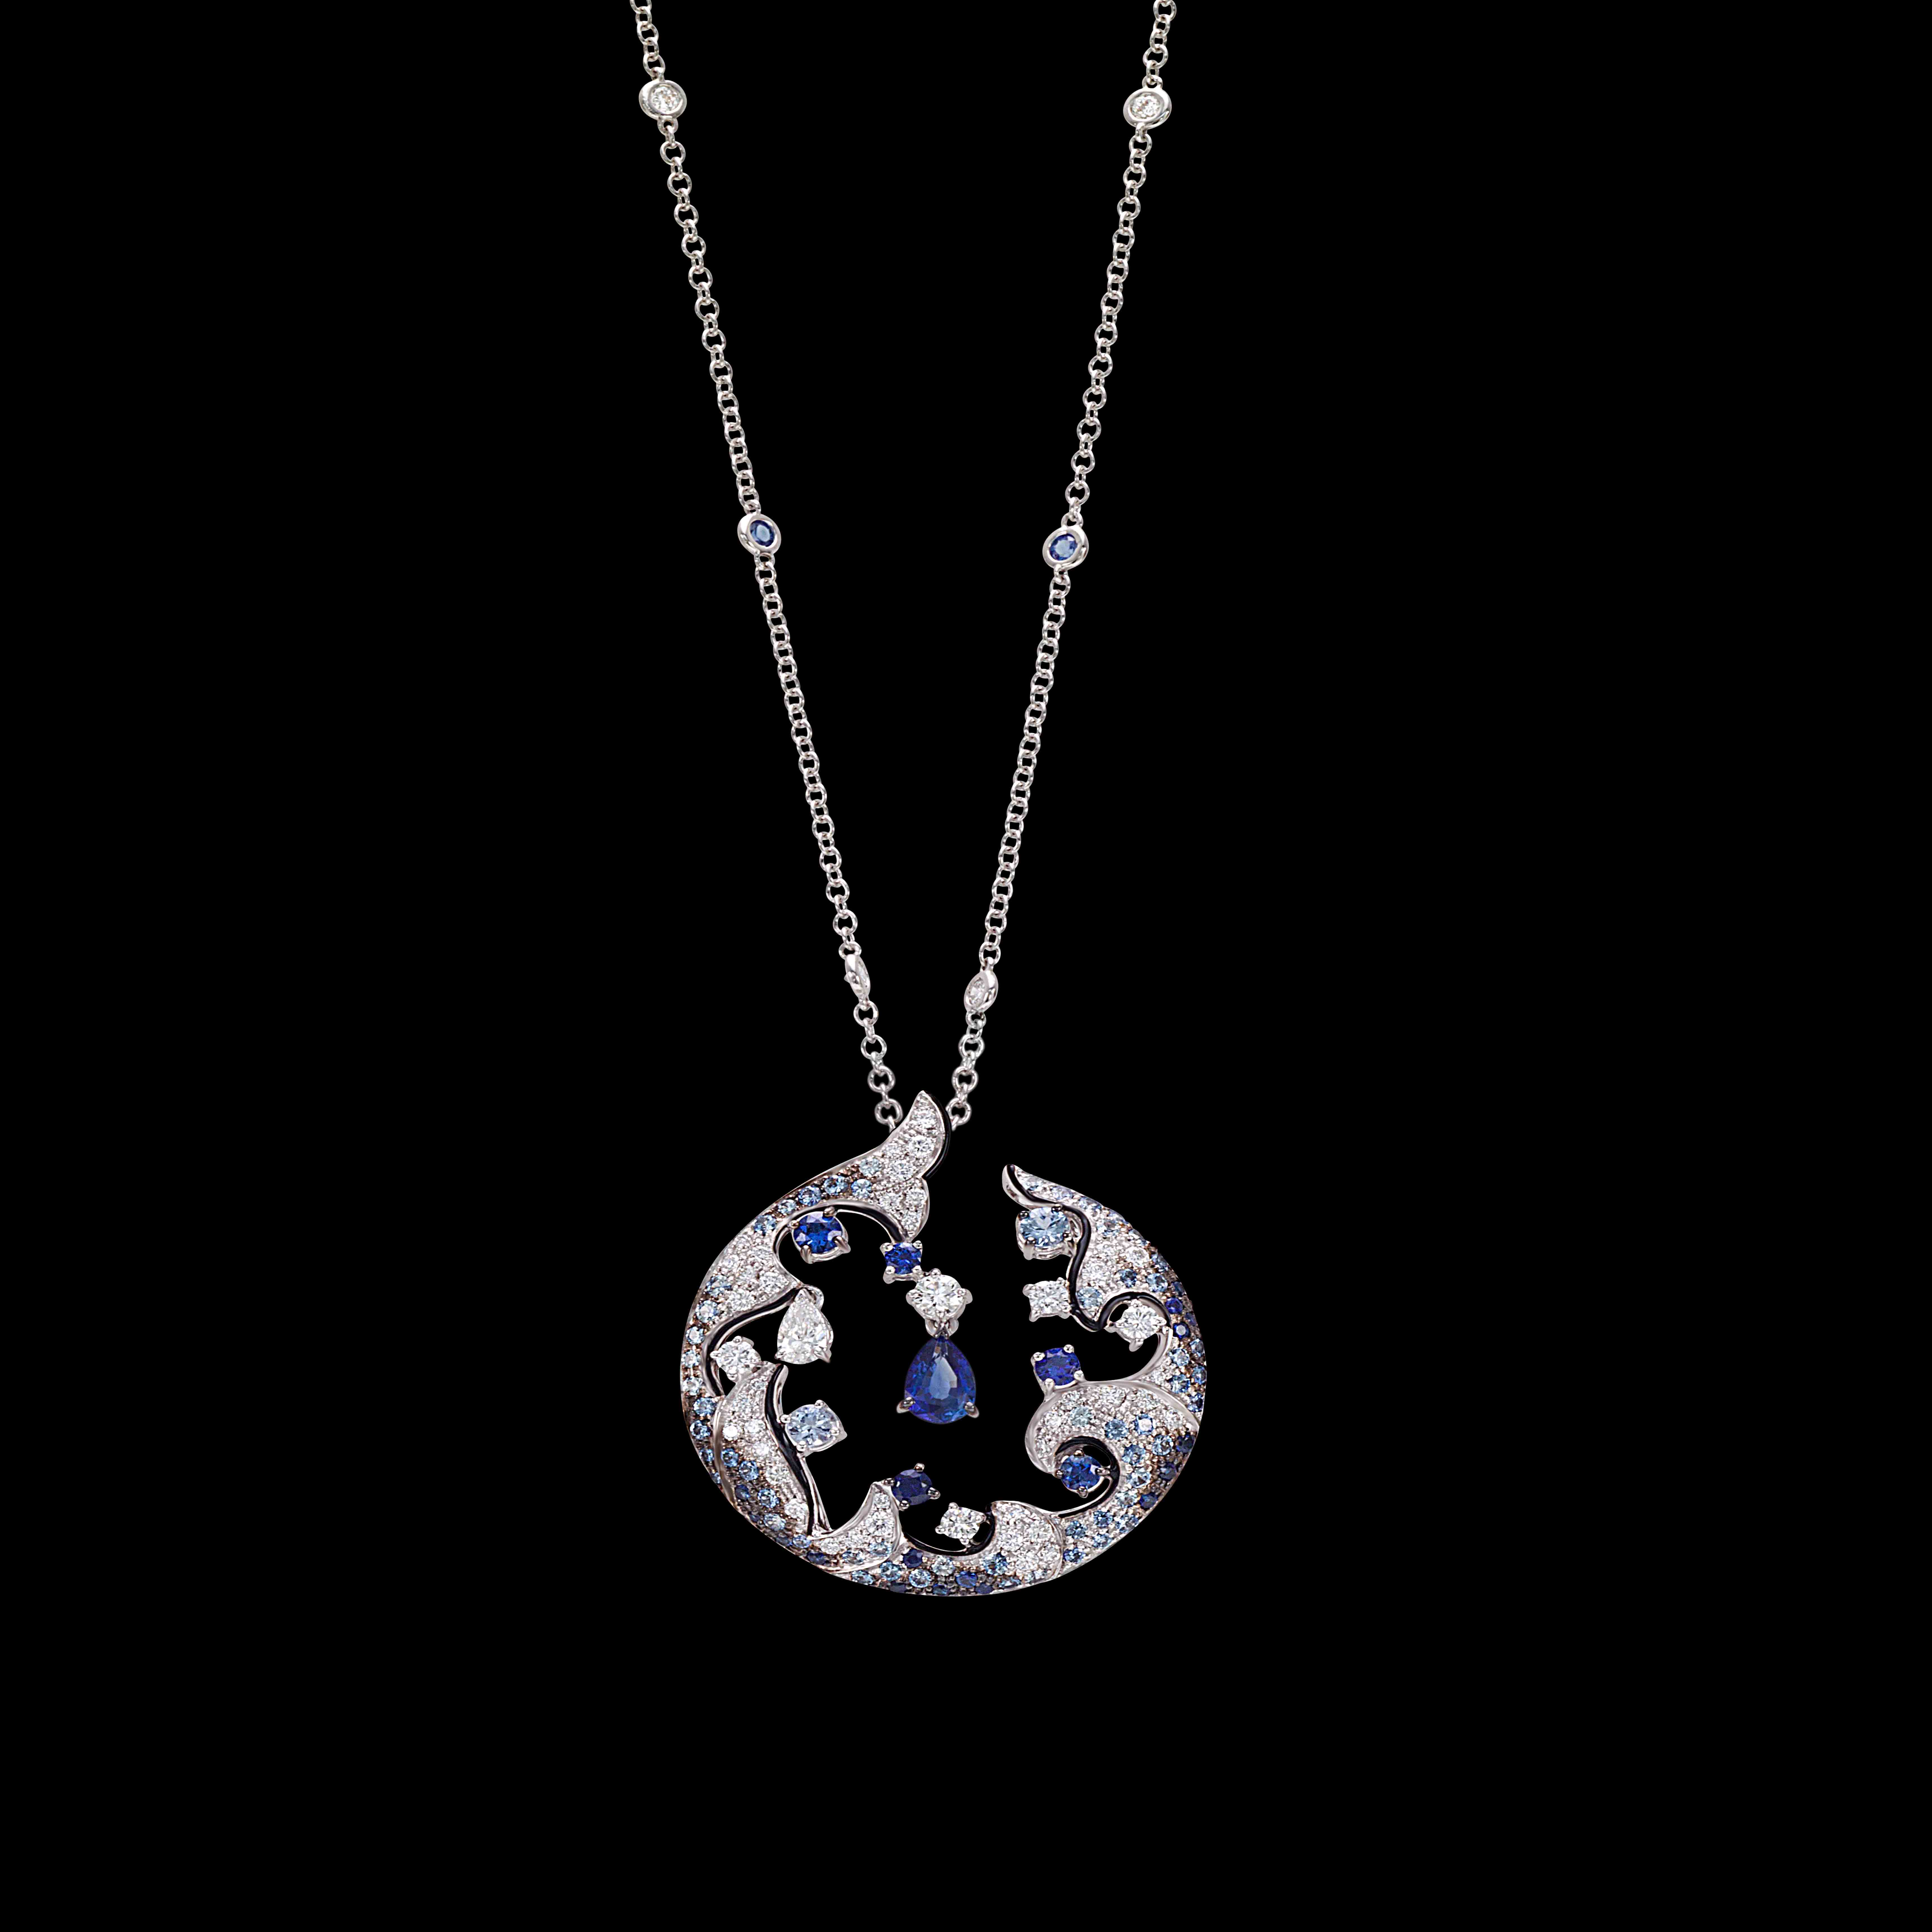 GR 1143 ZF massimo raiteri jewellery sapphire desing gioielli